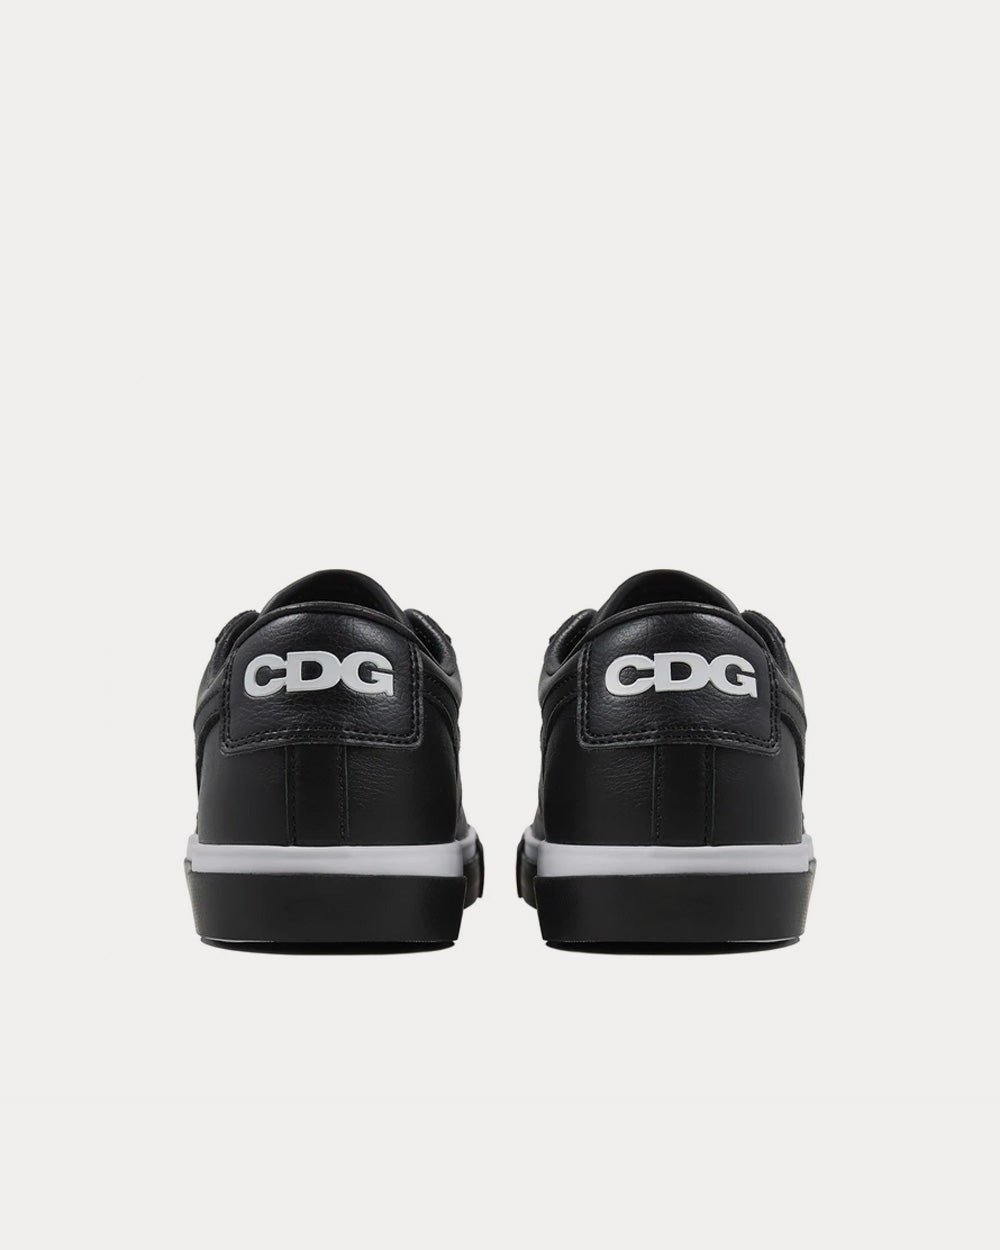 Nike x Comme des Garçons - Blazer Black Low Top Sneakers